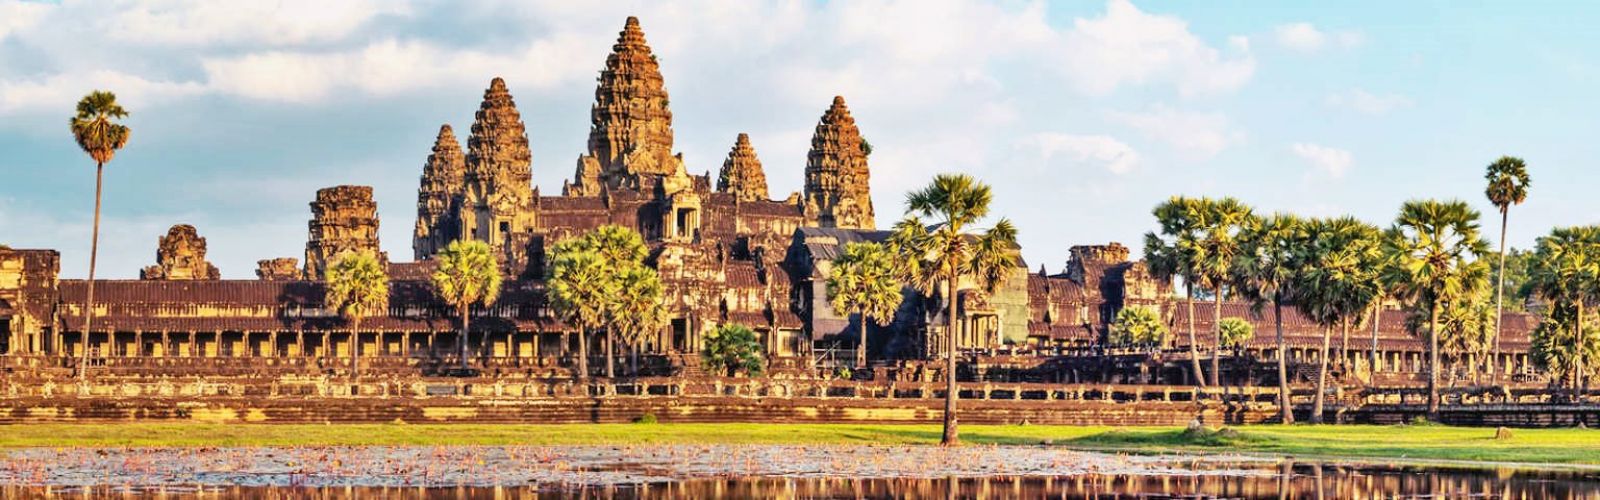 Cambodia Historical Heritage